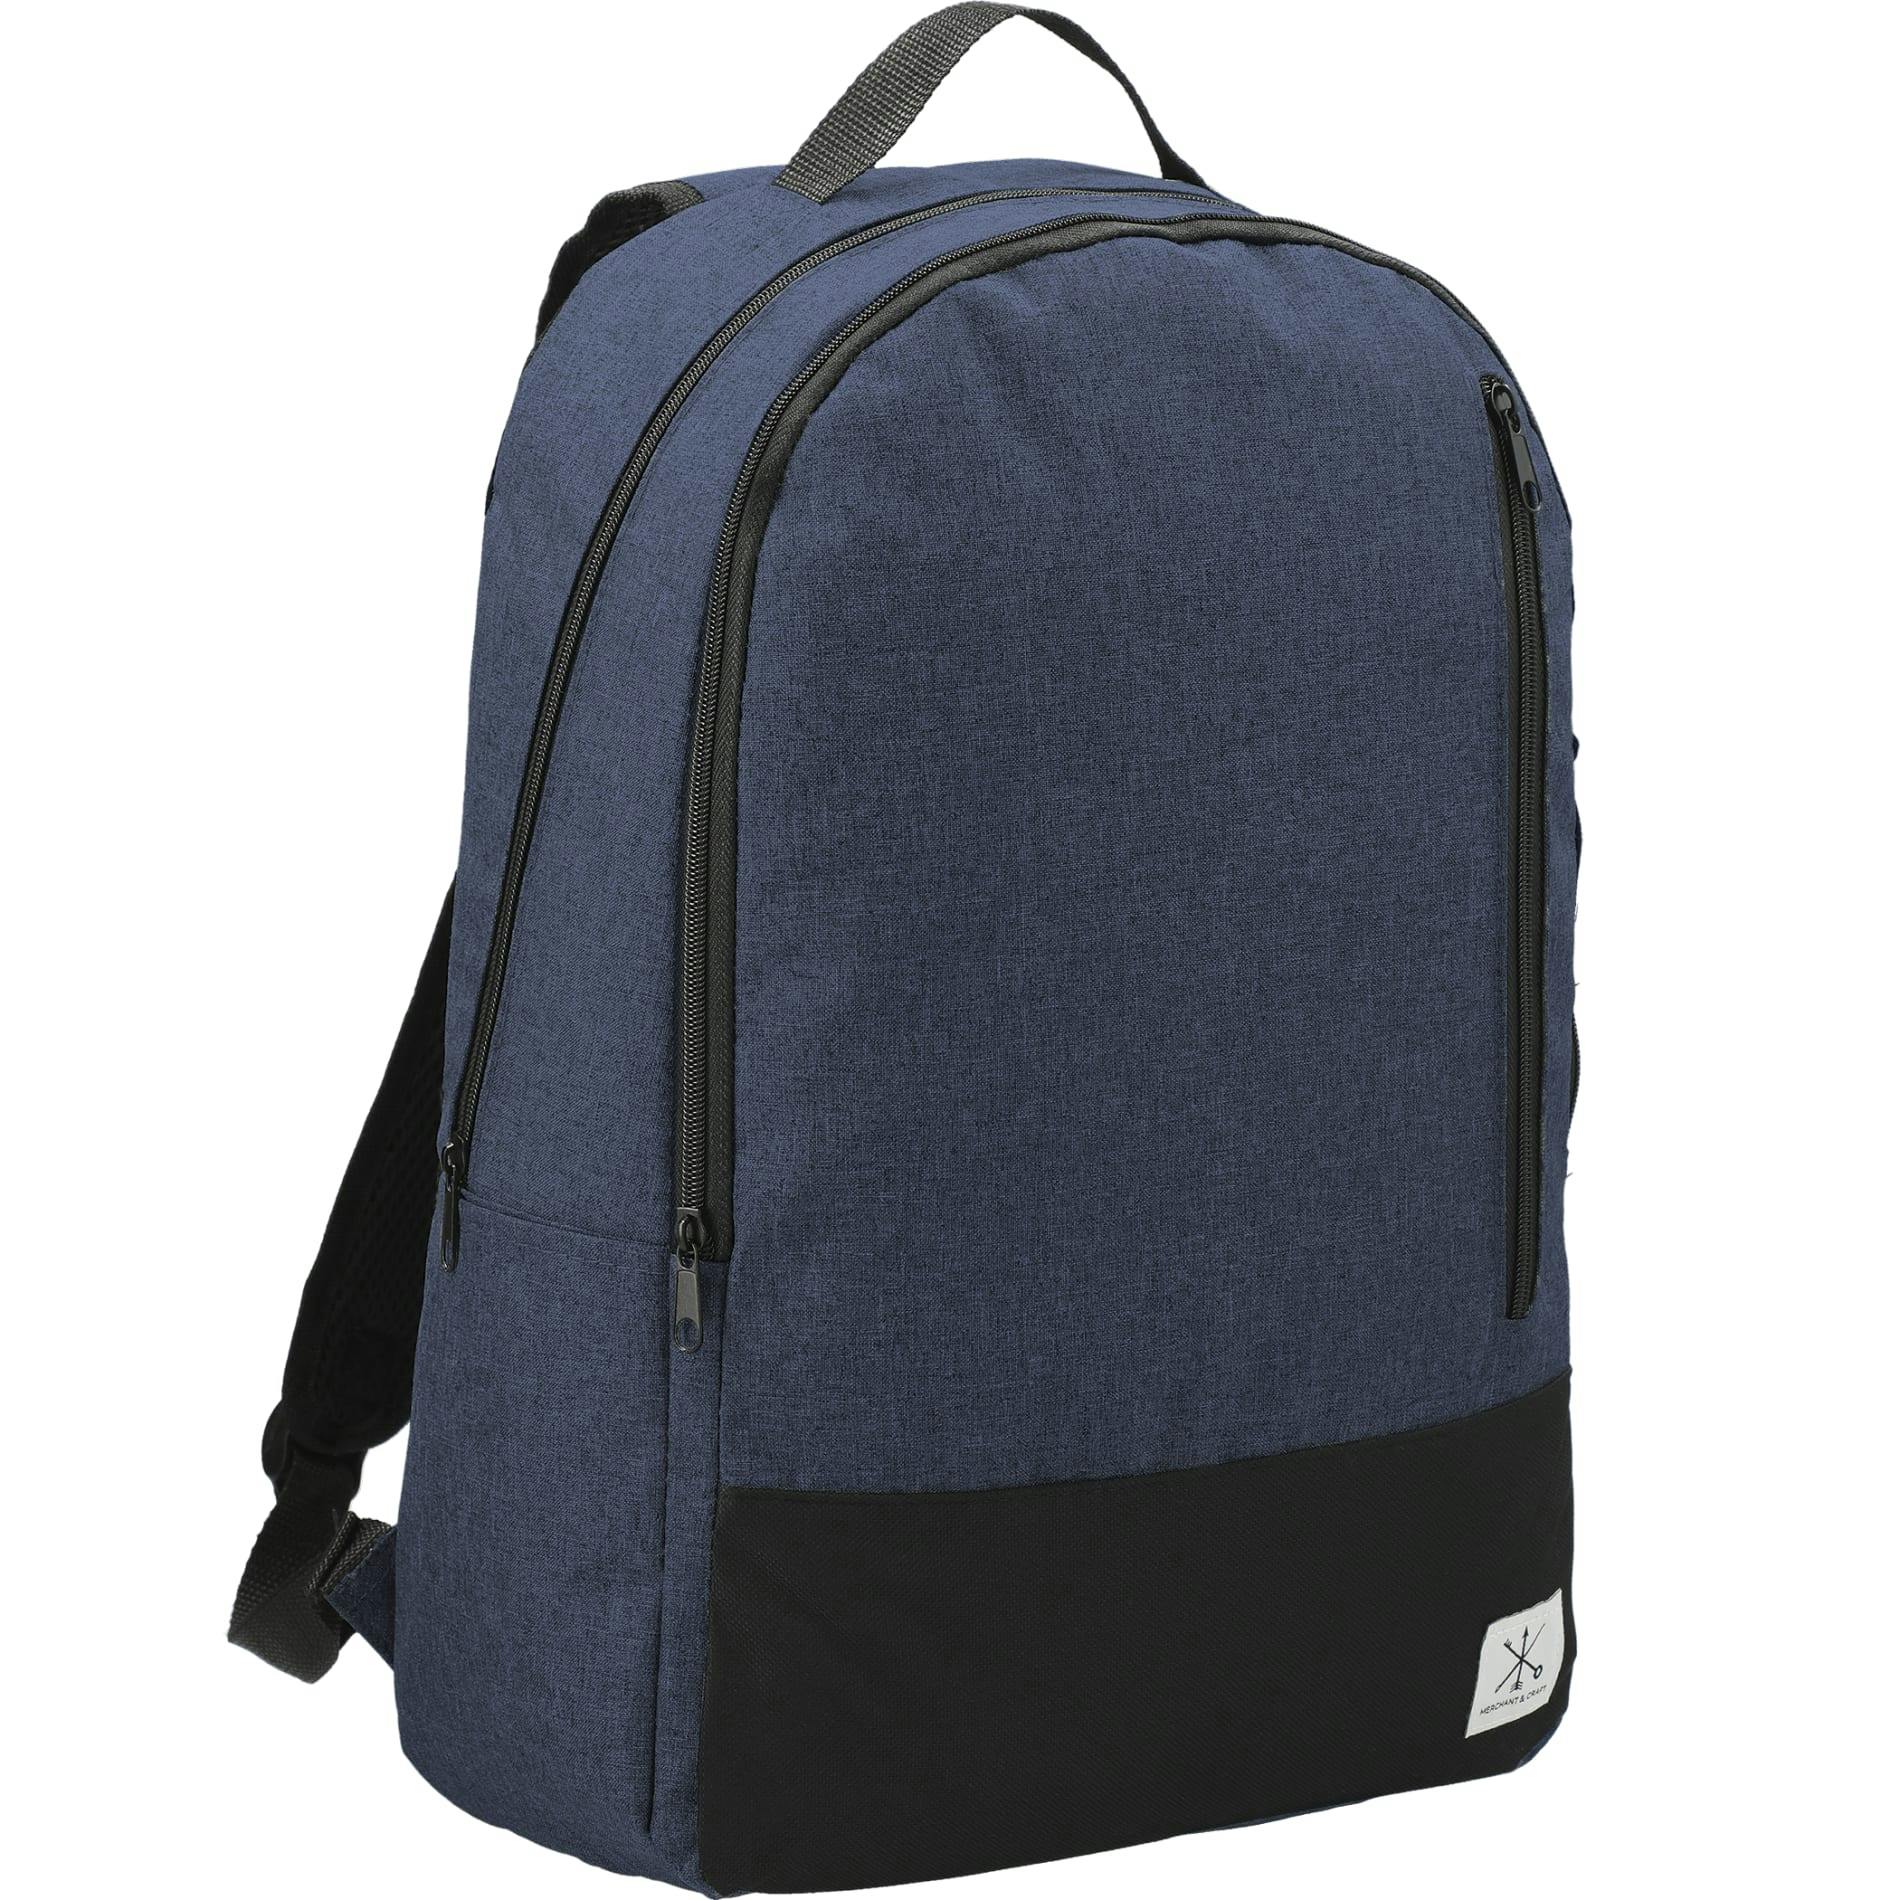 Merchant & Craft Grayley 15" Computer Backpack - additional Image 2